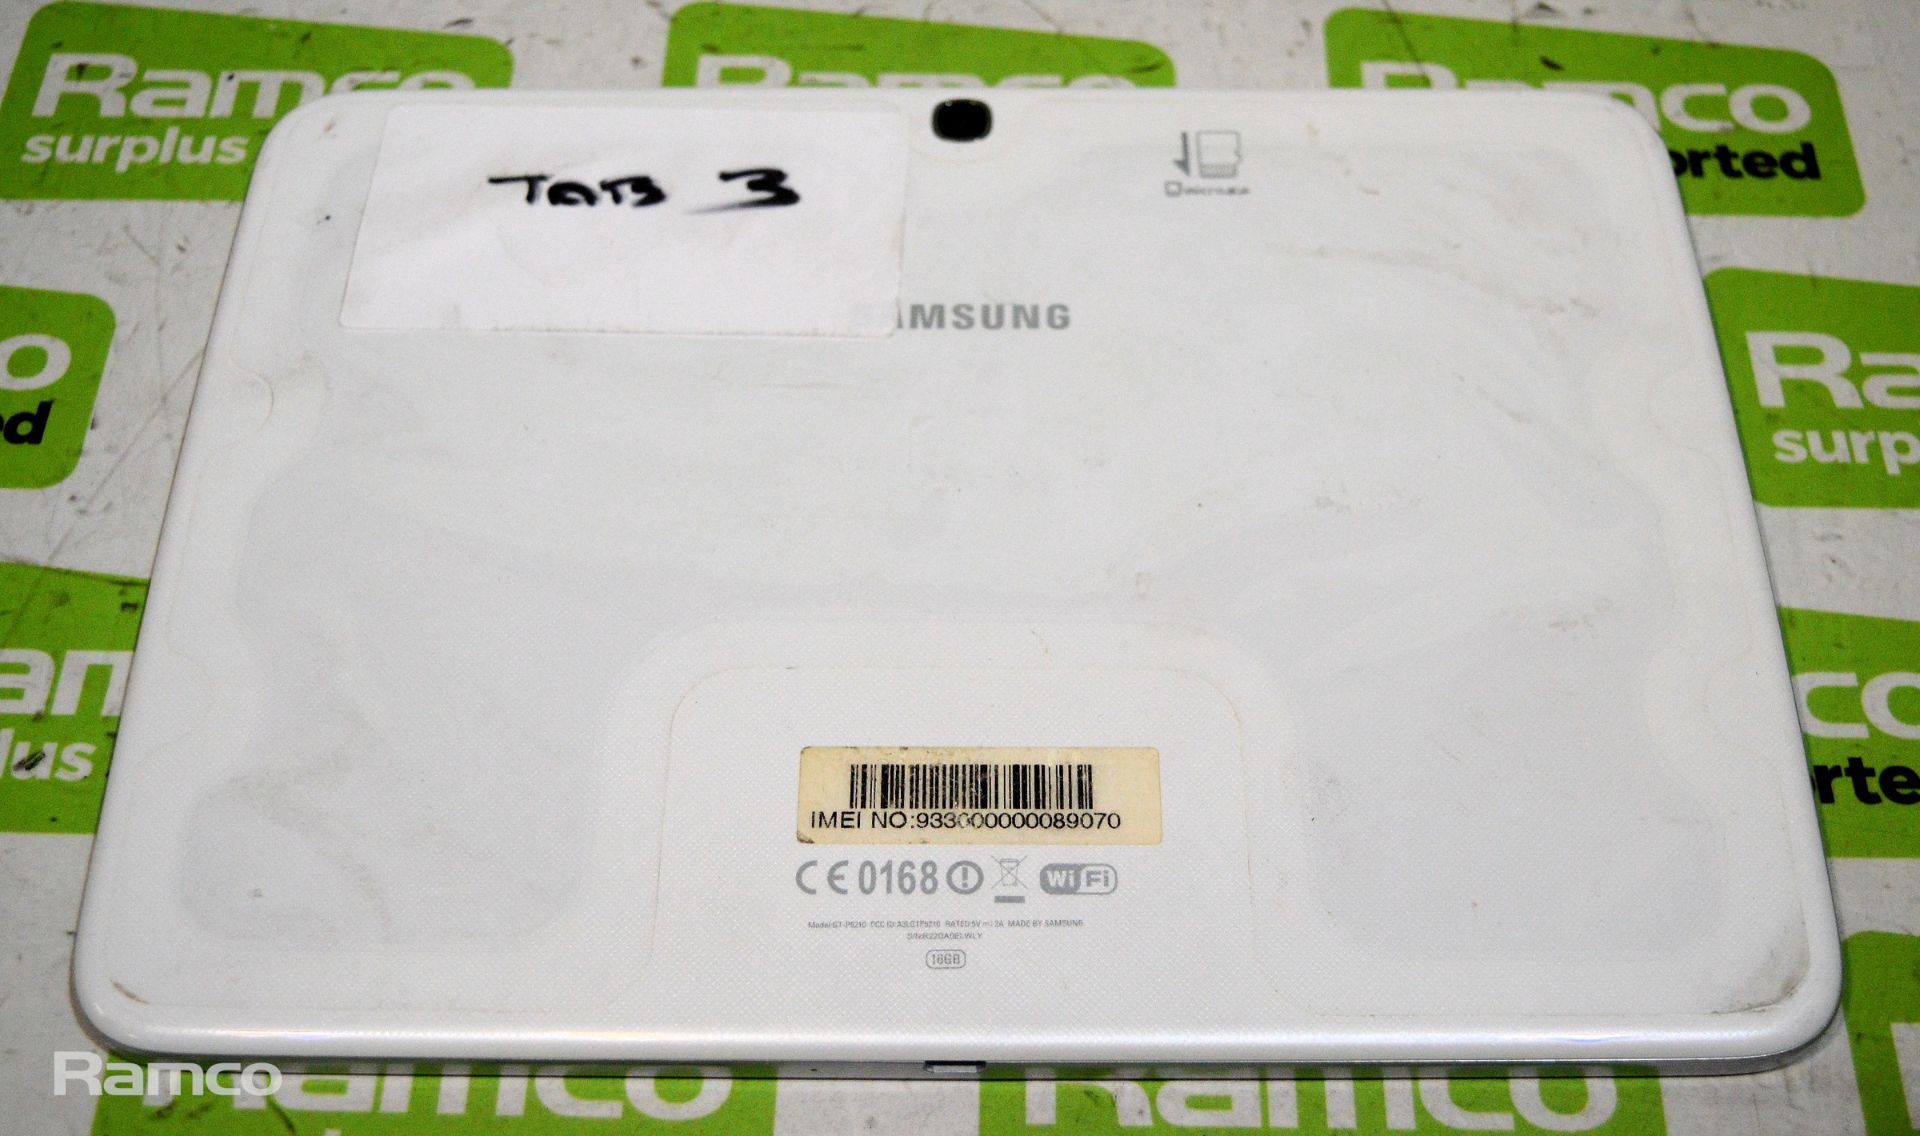 Samsung Tab 3 Tablet - IMEI 933000000089070 - Image 2 of 2